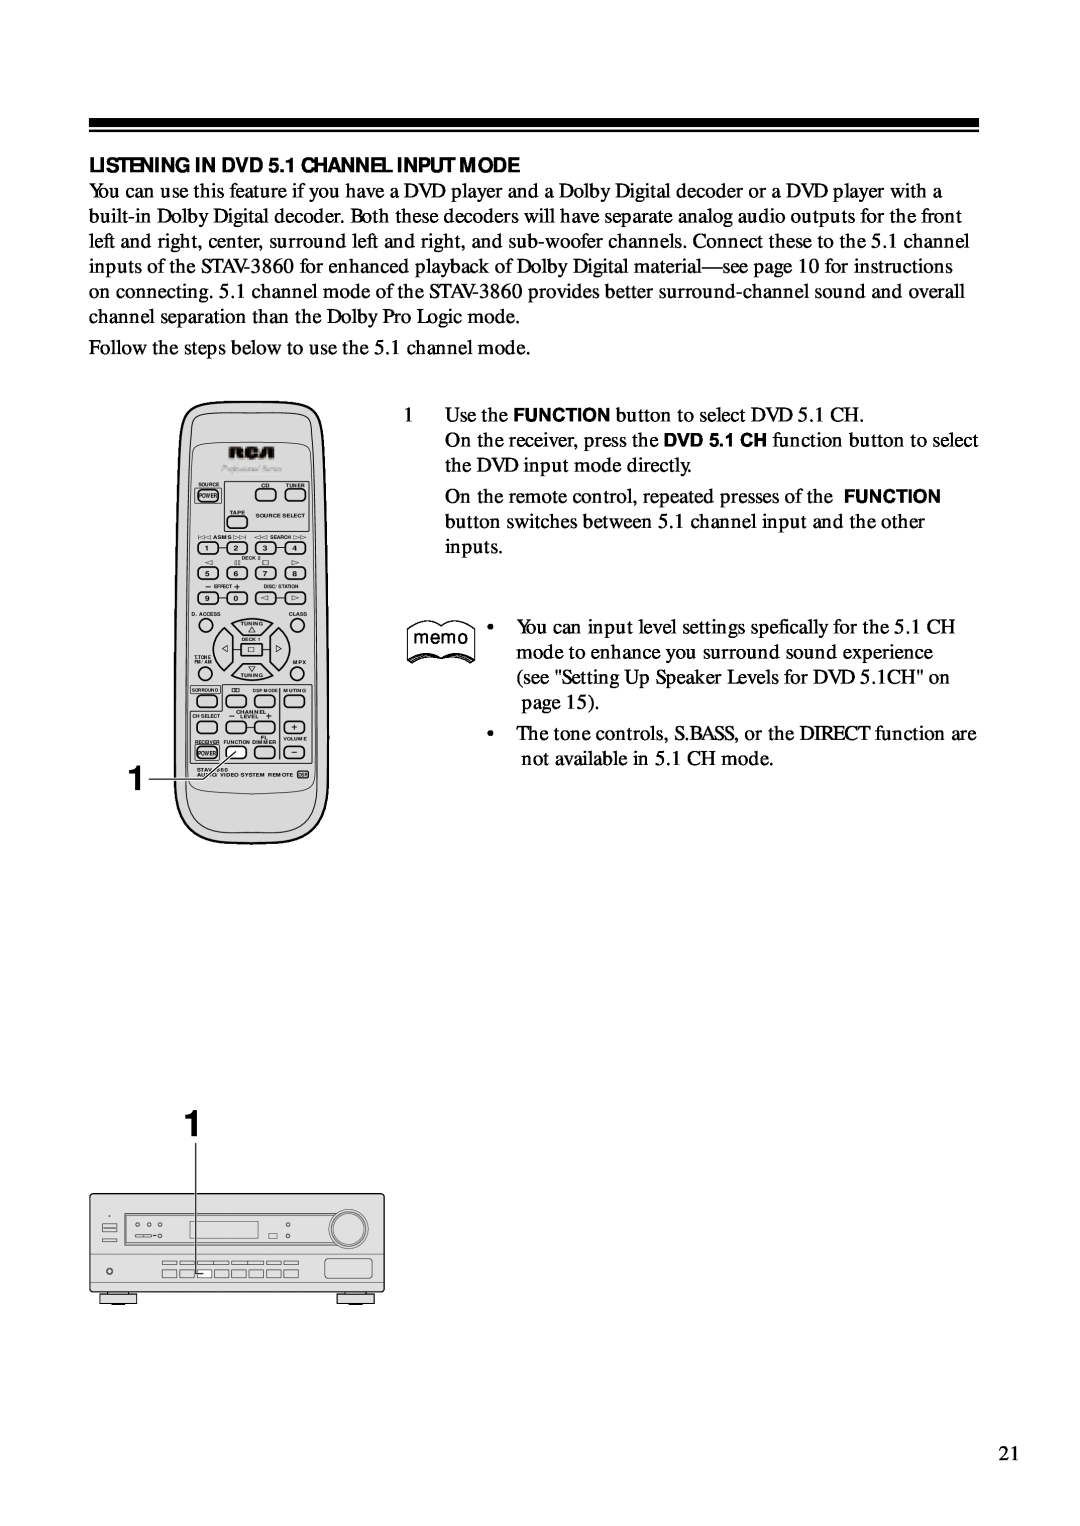 RCA STAV3860 owner manual LISTENING IN DVD 5.1 CHANNEL INPUT MODE 